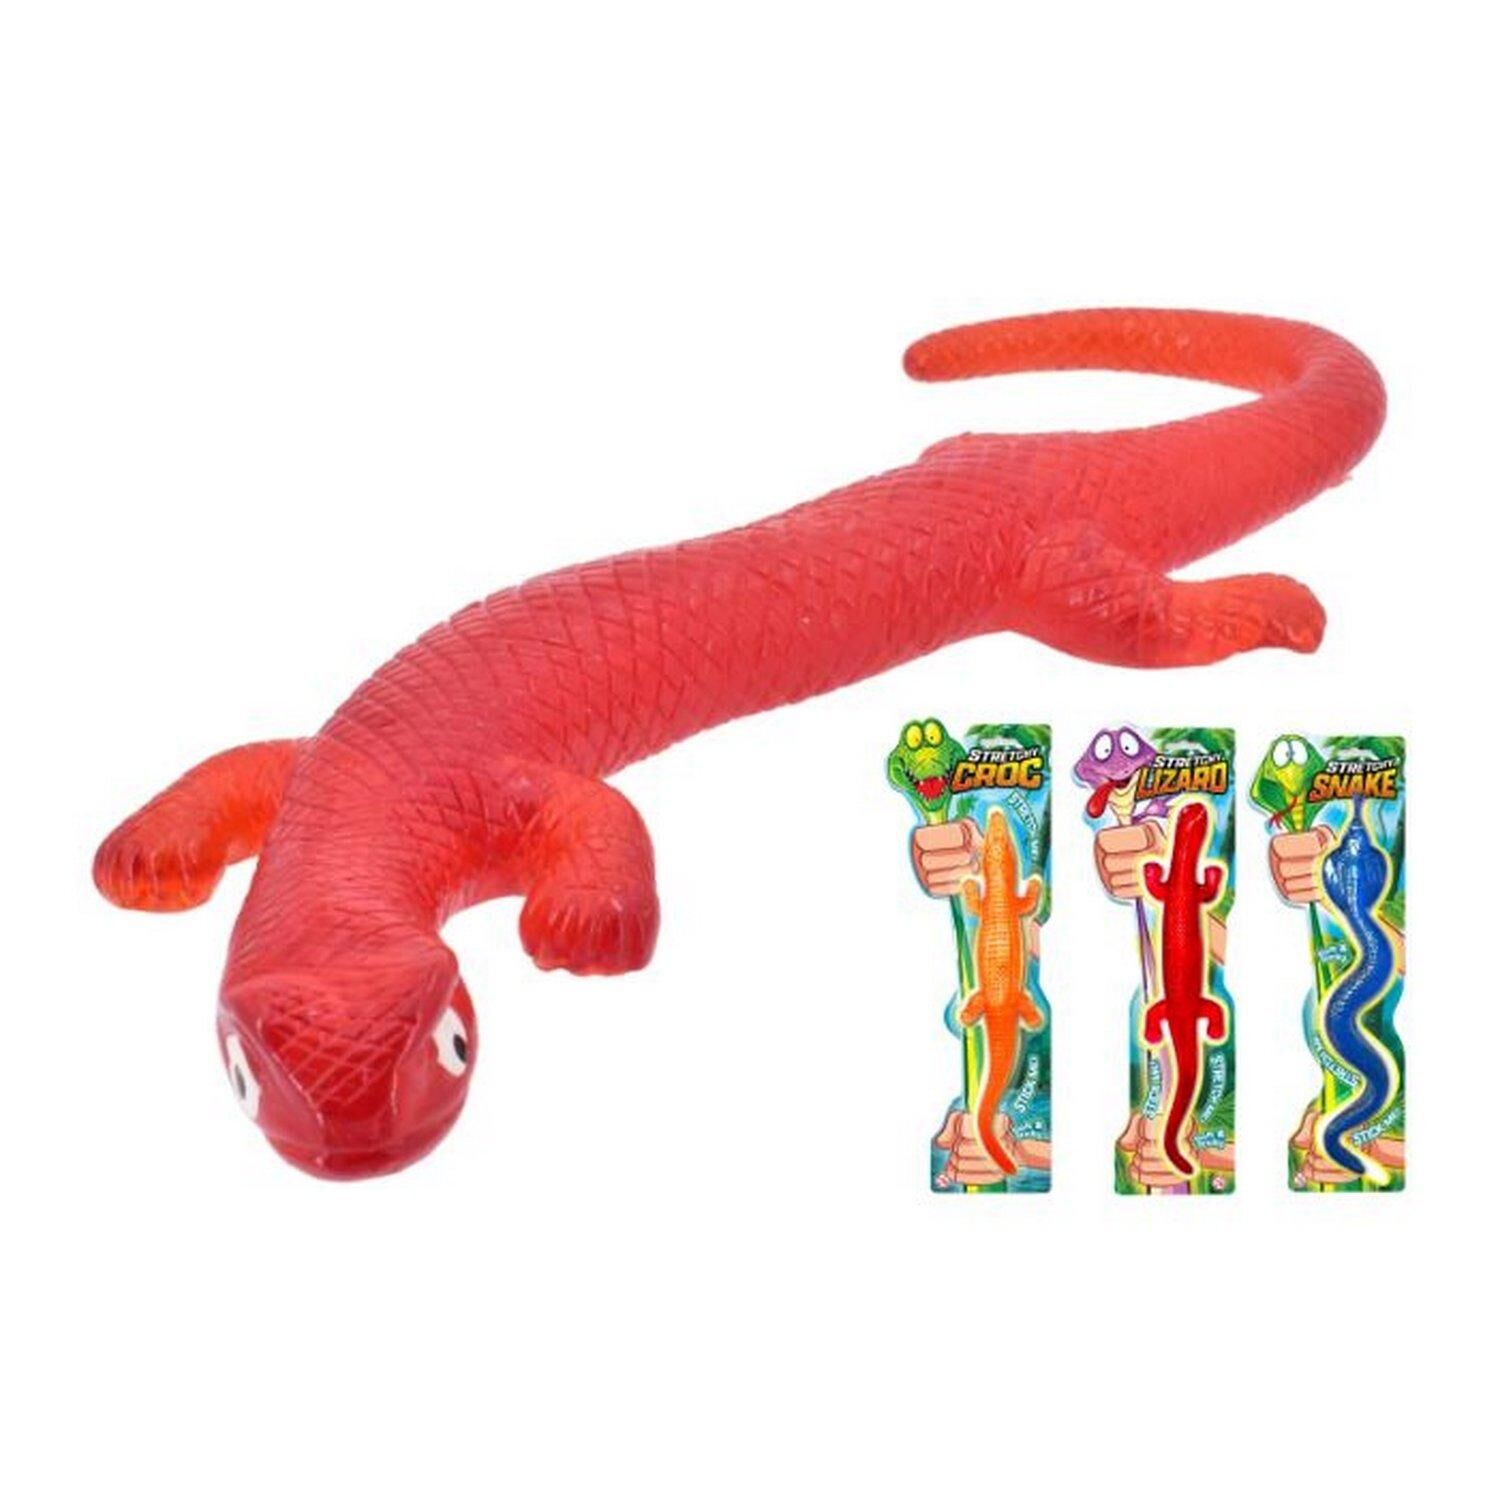 Kandy Toys Large Stretchy Animal 34cm (Croc, Snake or Lizard)